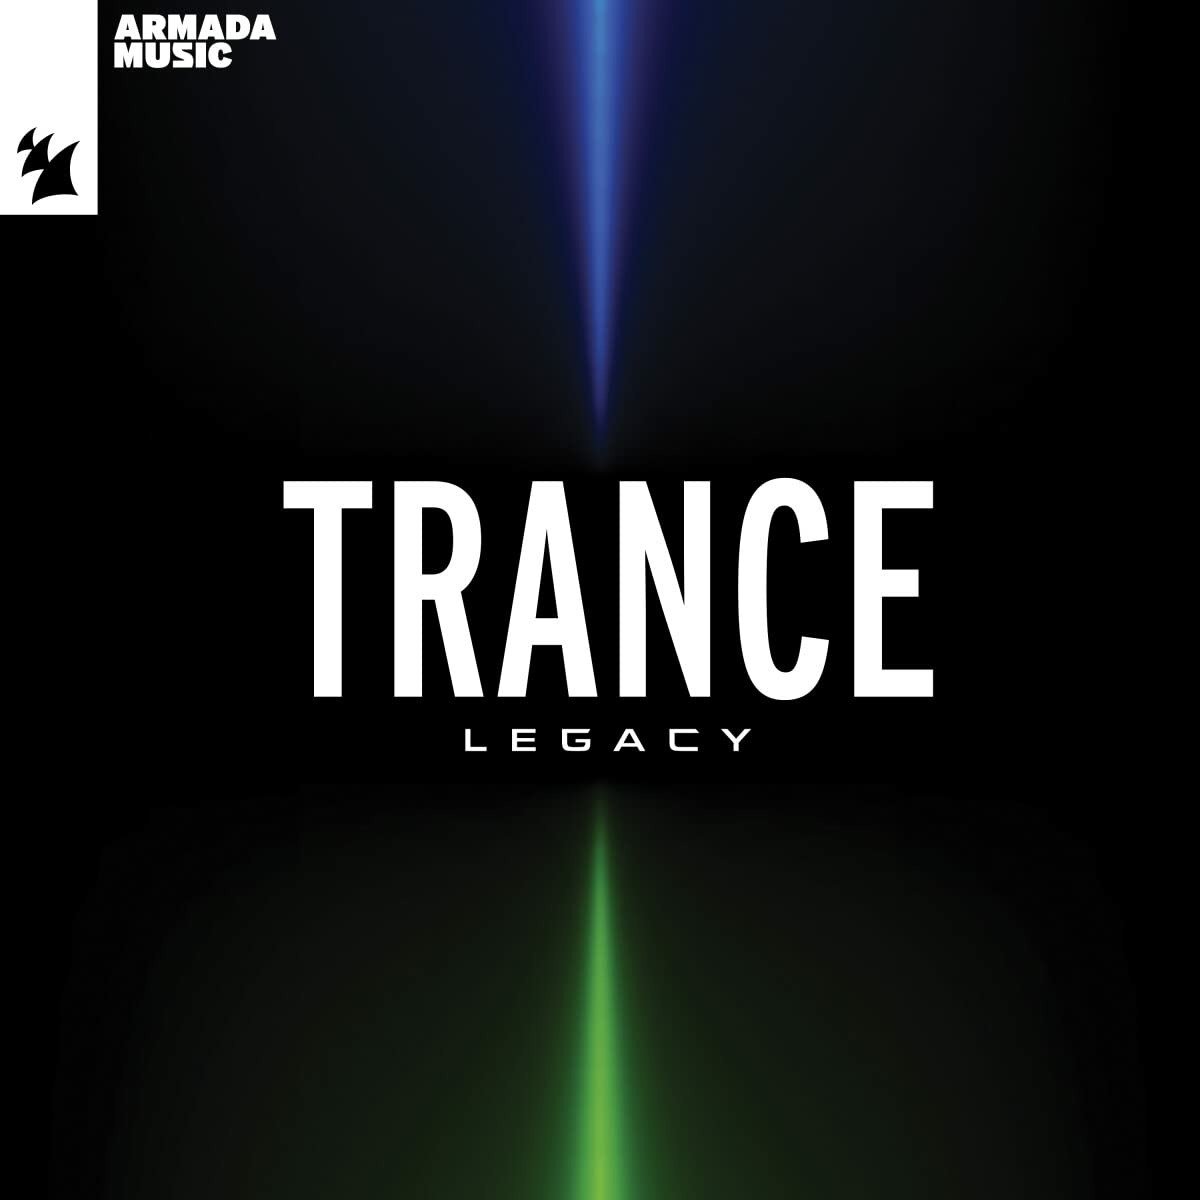 CD Shop - V/A ARMADA MUSIC TRANCE LEGACY